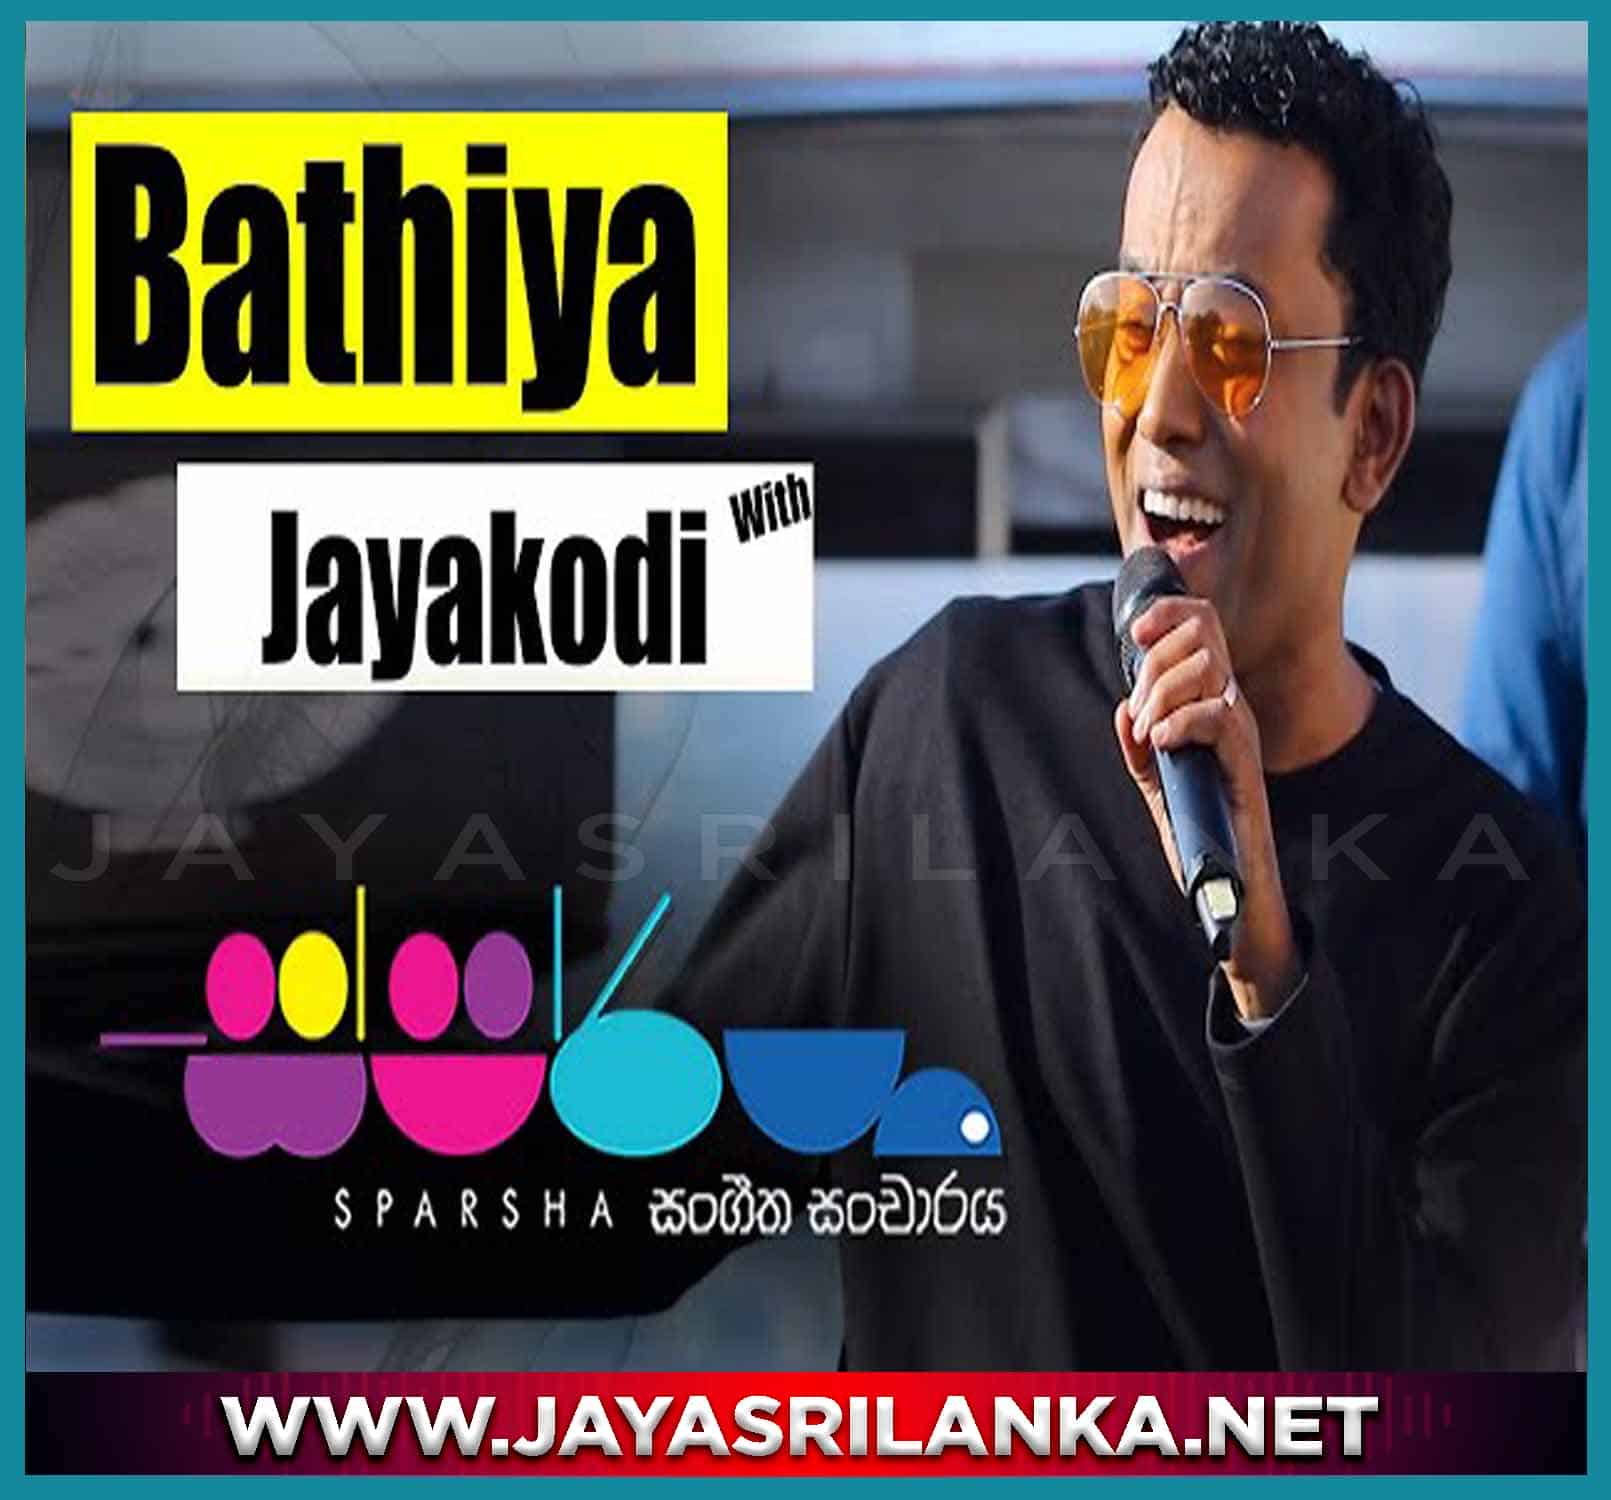 02 - Yanna Rata Wate (Sparsha) - Bathiya Jayakody mp3 Image